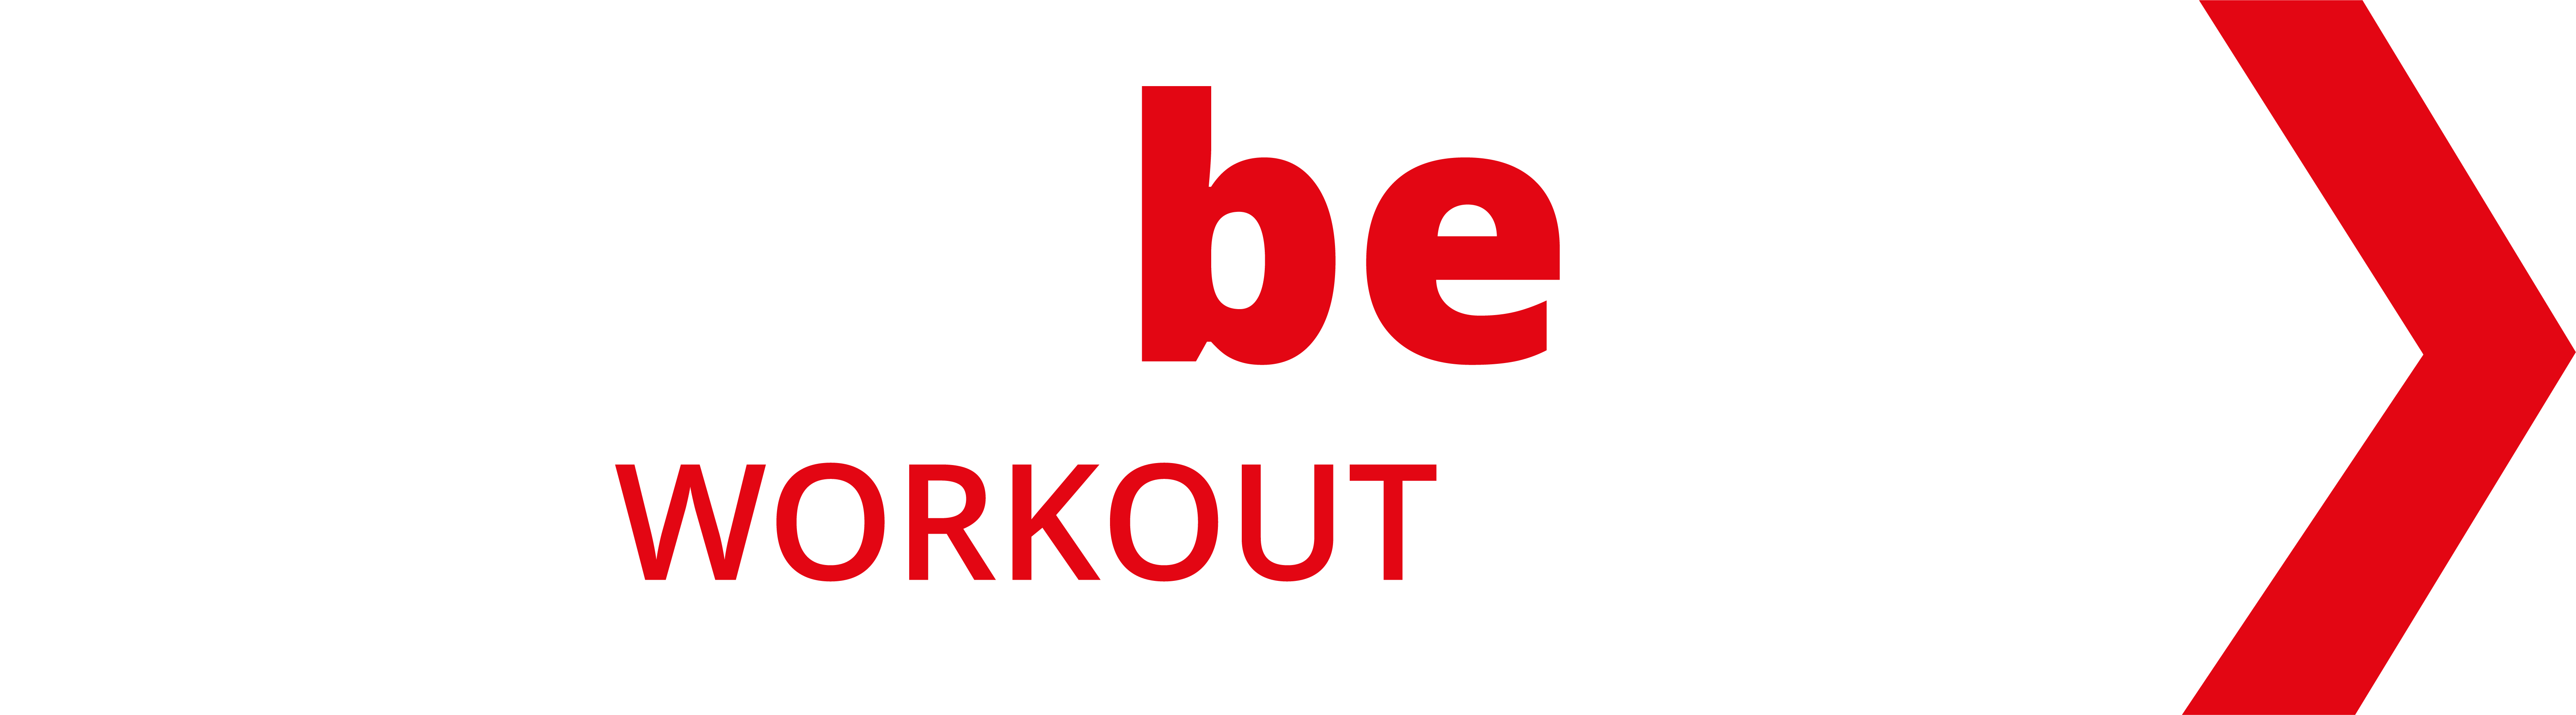 Revex beFIT – Workout & more Logo